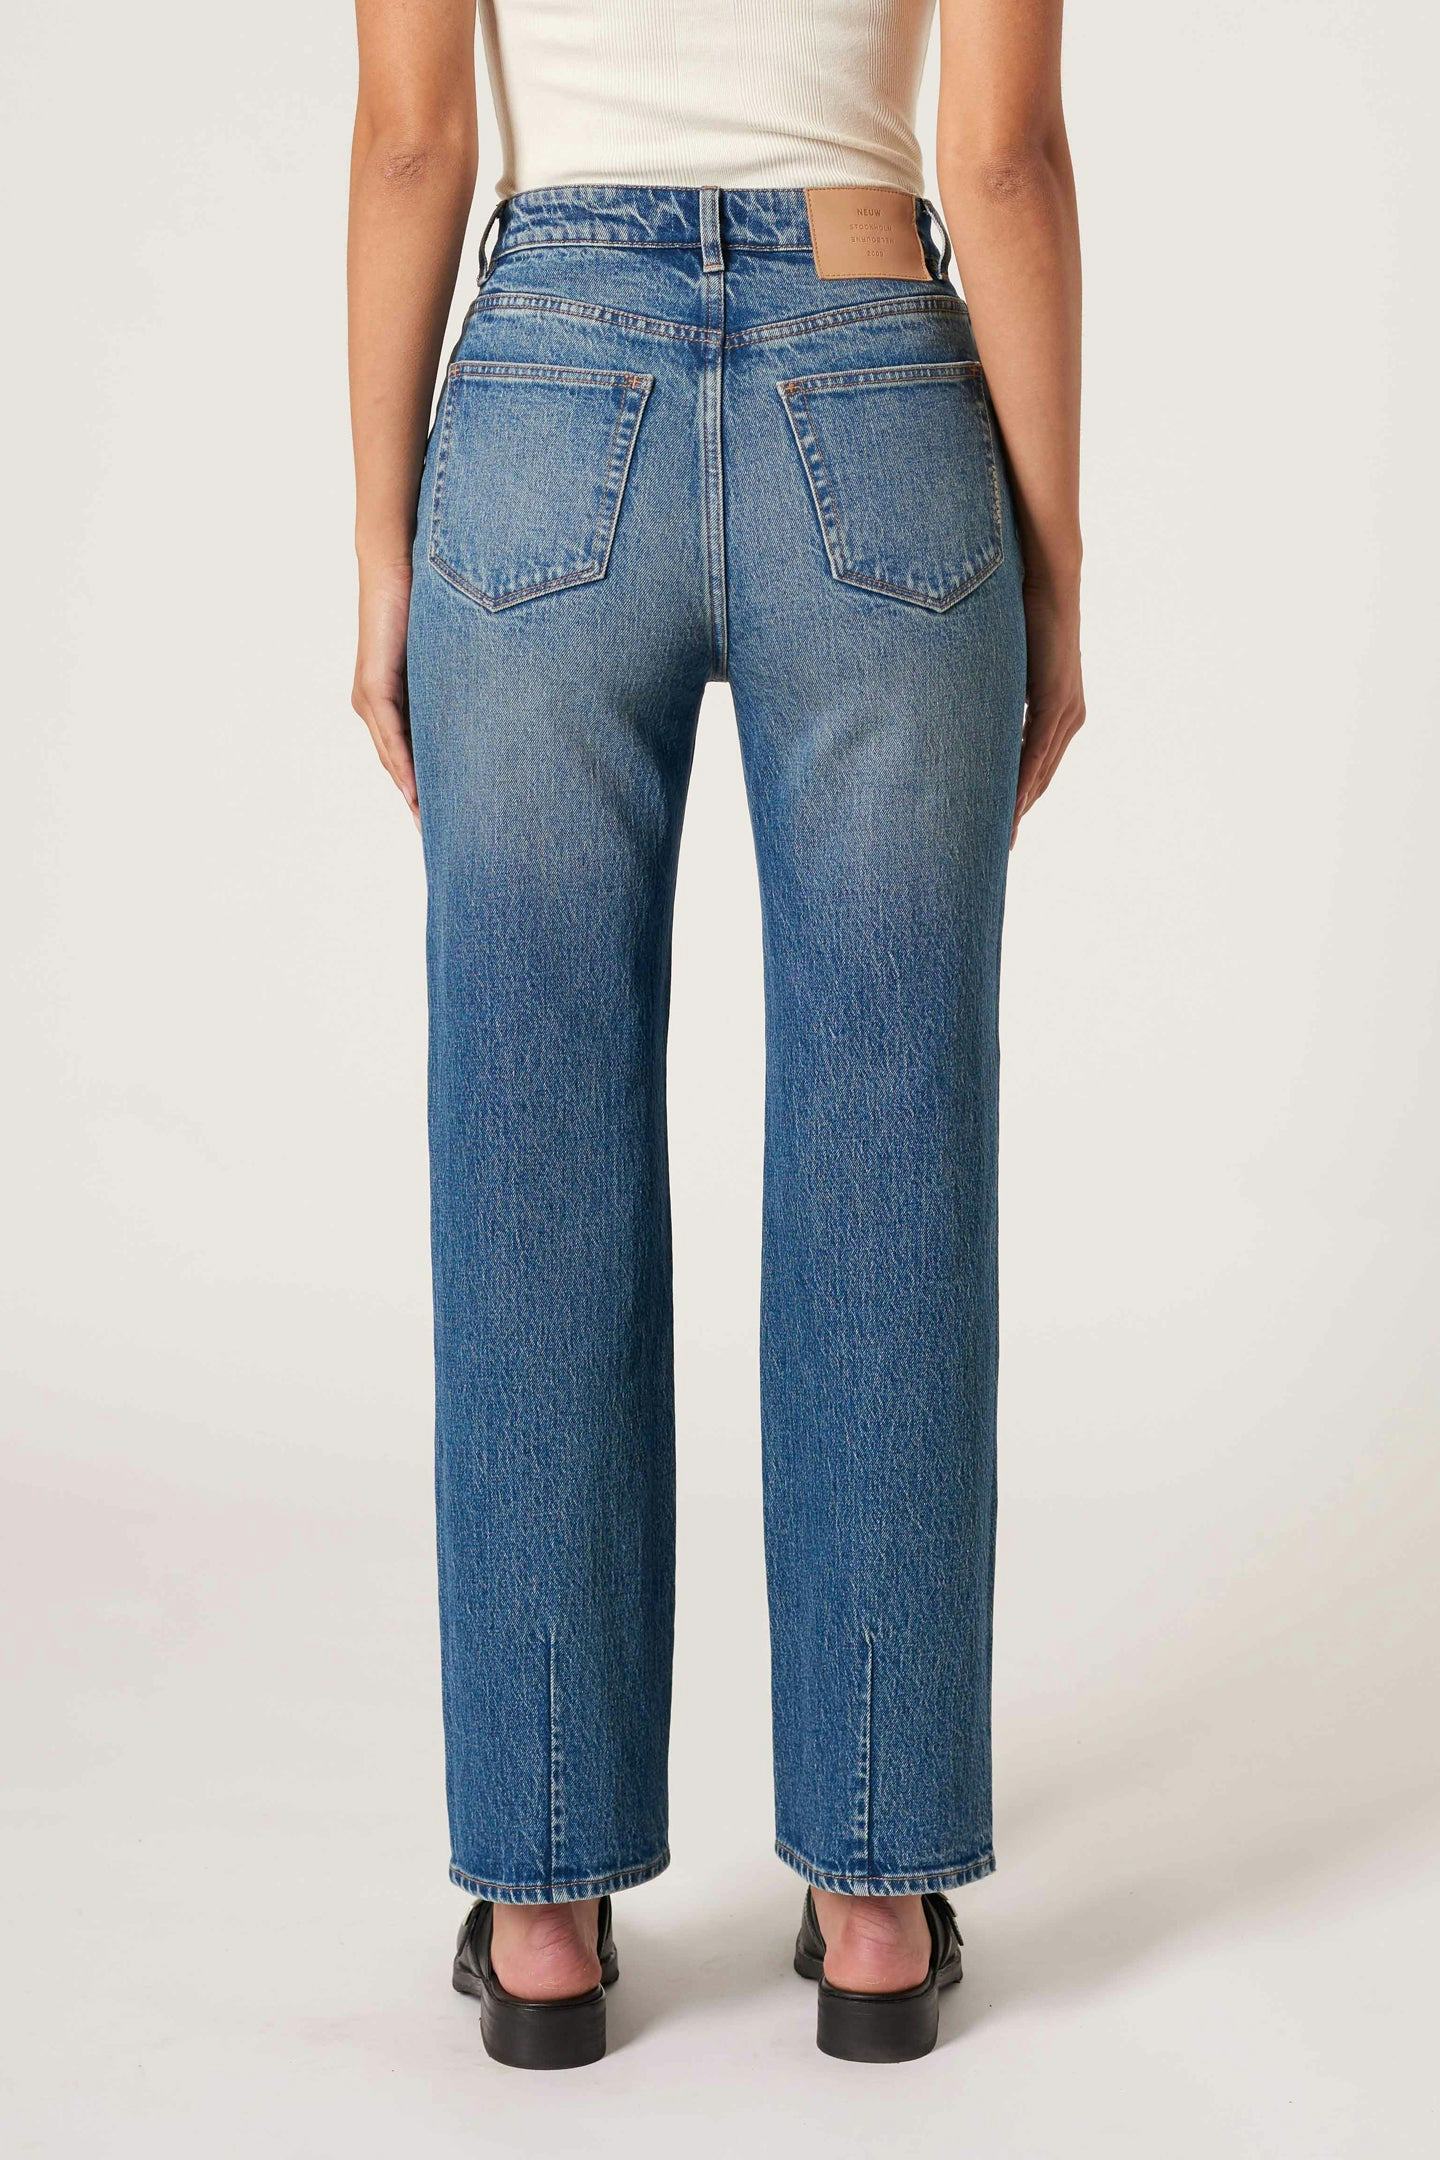 Nico Straight - Classic Neuw mid grey womens-jeans 